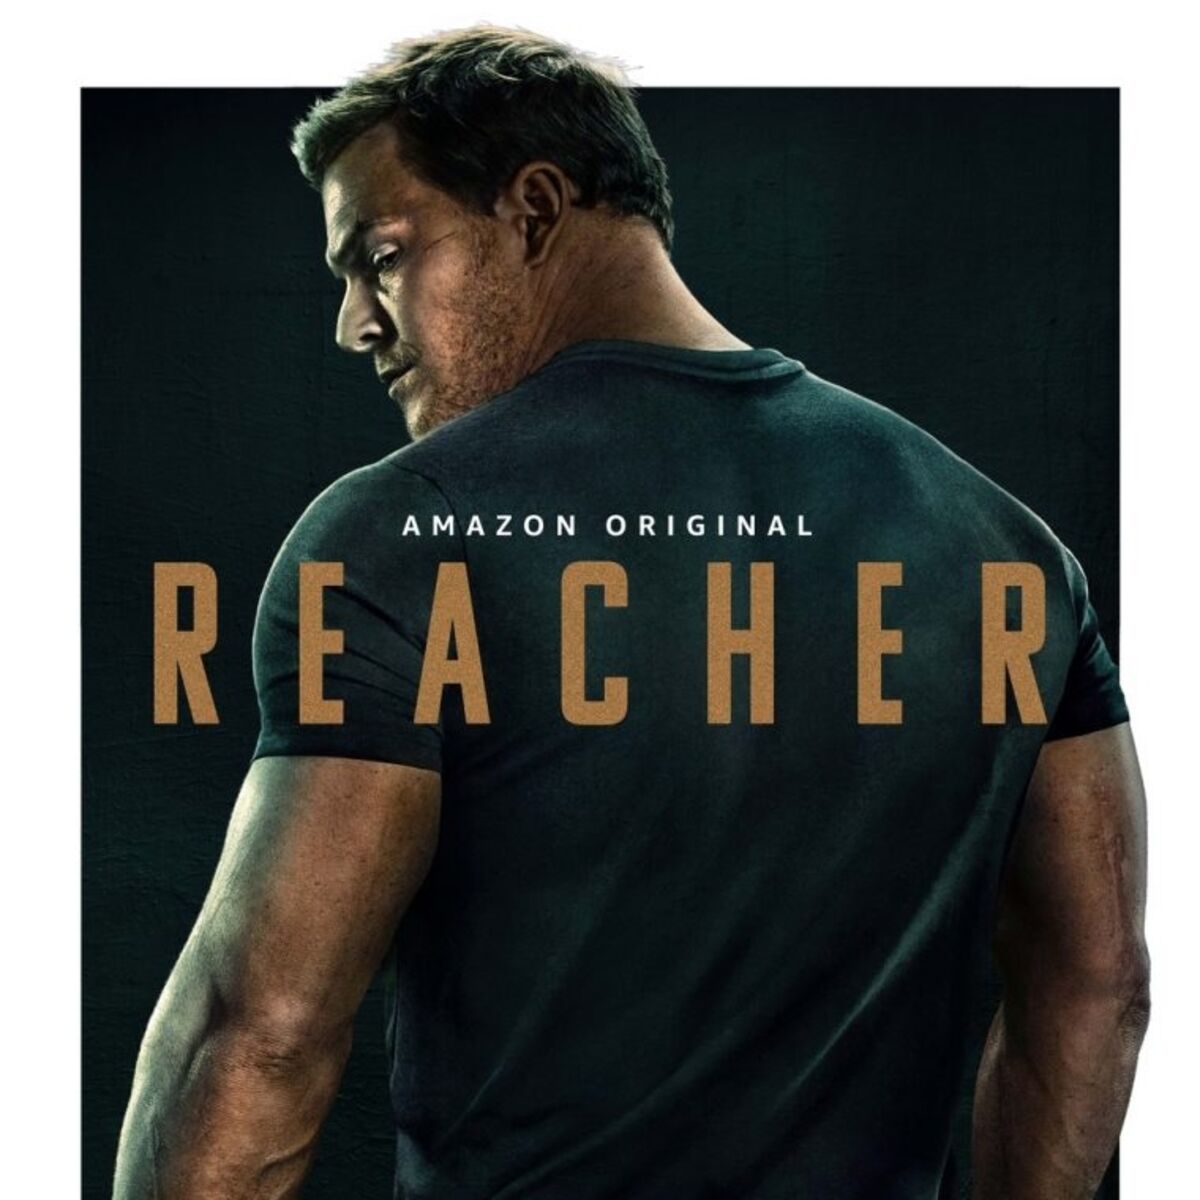 Reacher Soundtrack